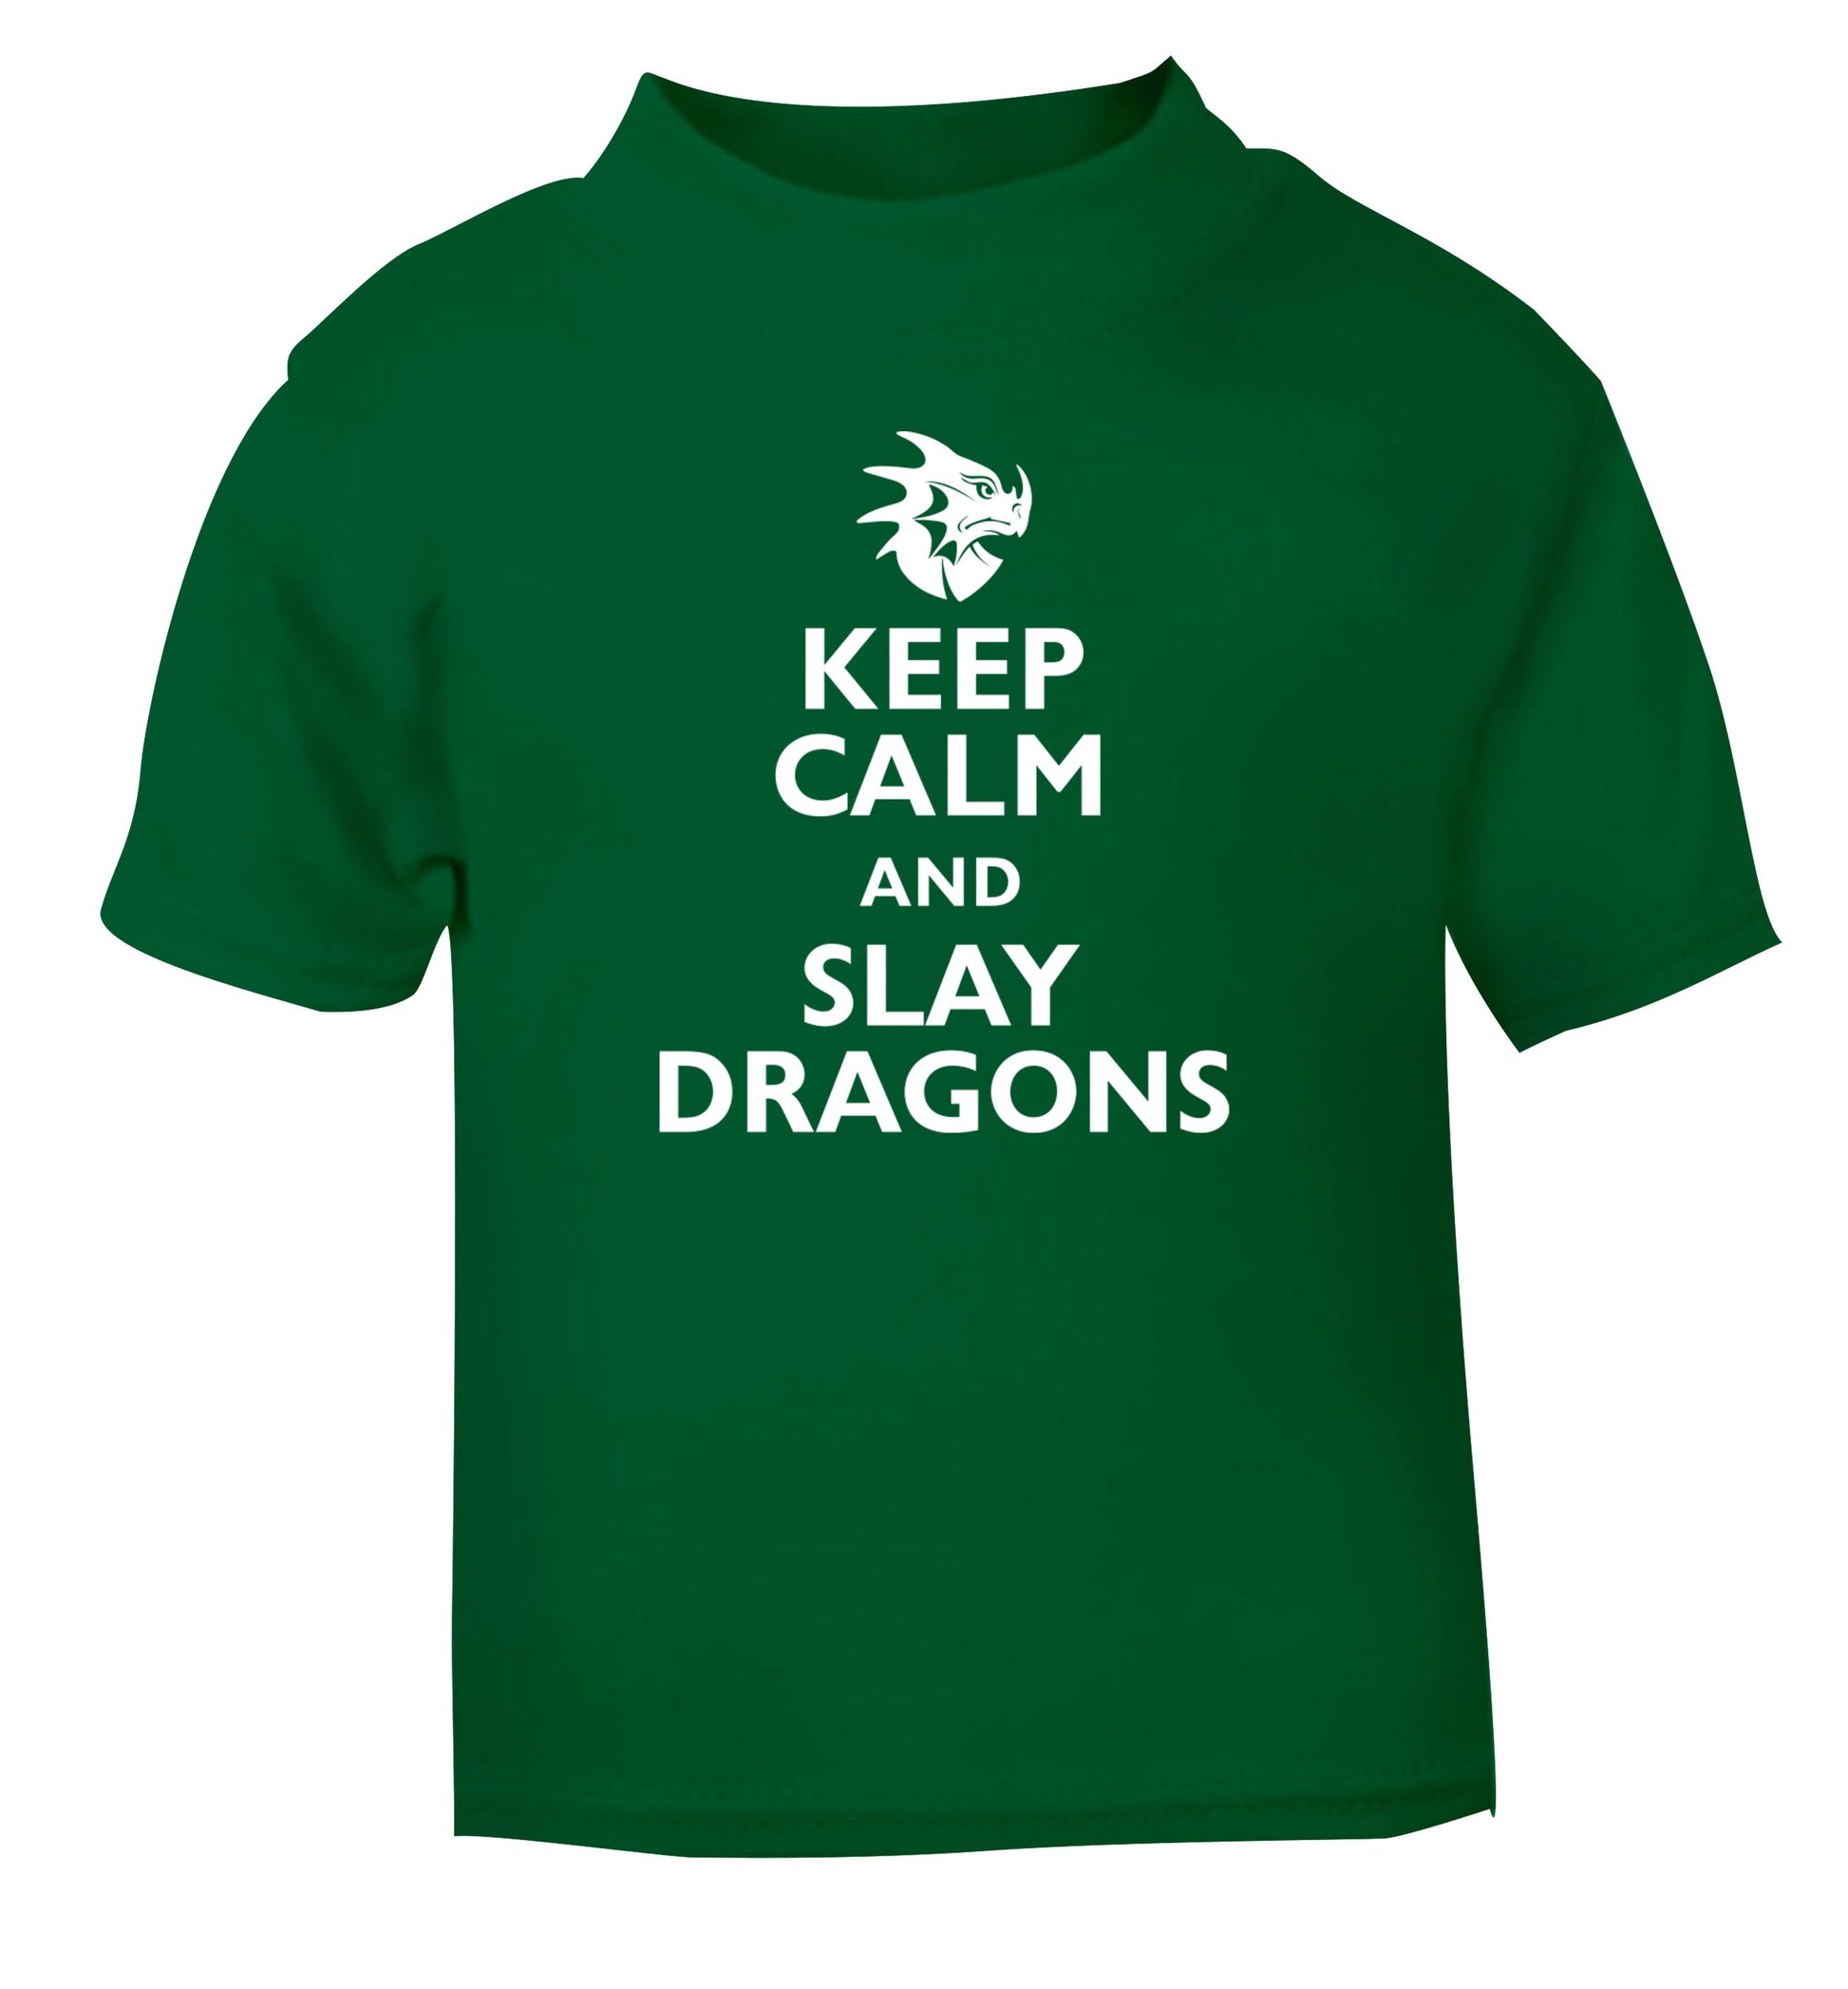 Keep calm and slay dragons green Baby Toddler Tshirt 2 Years